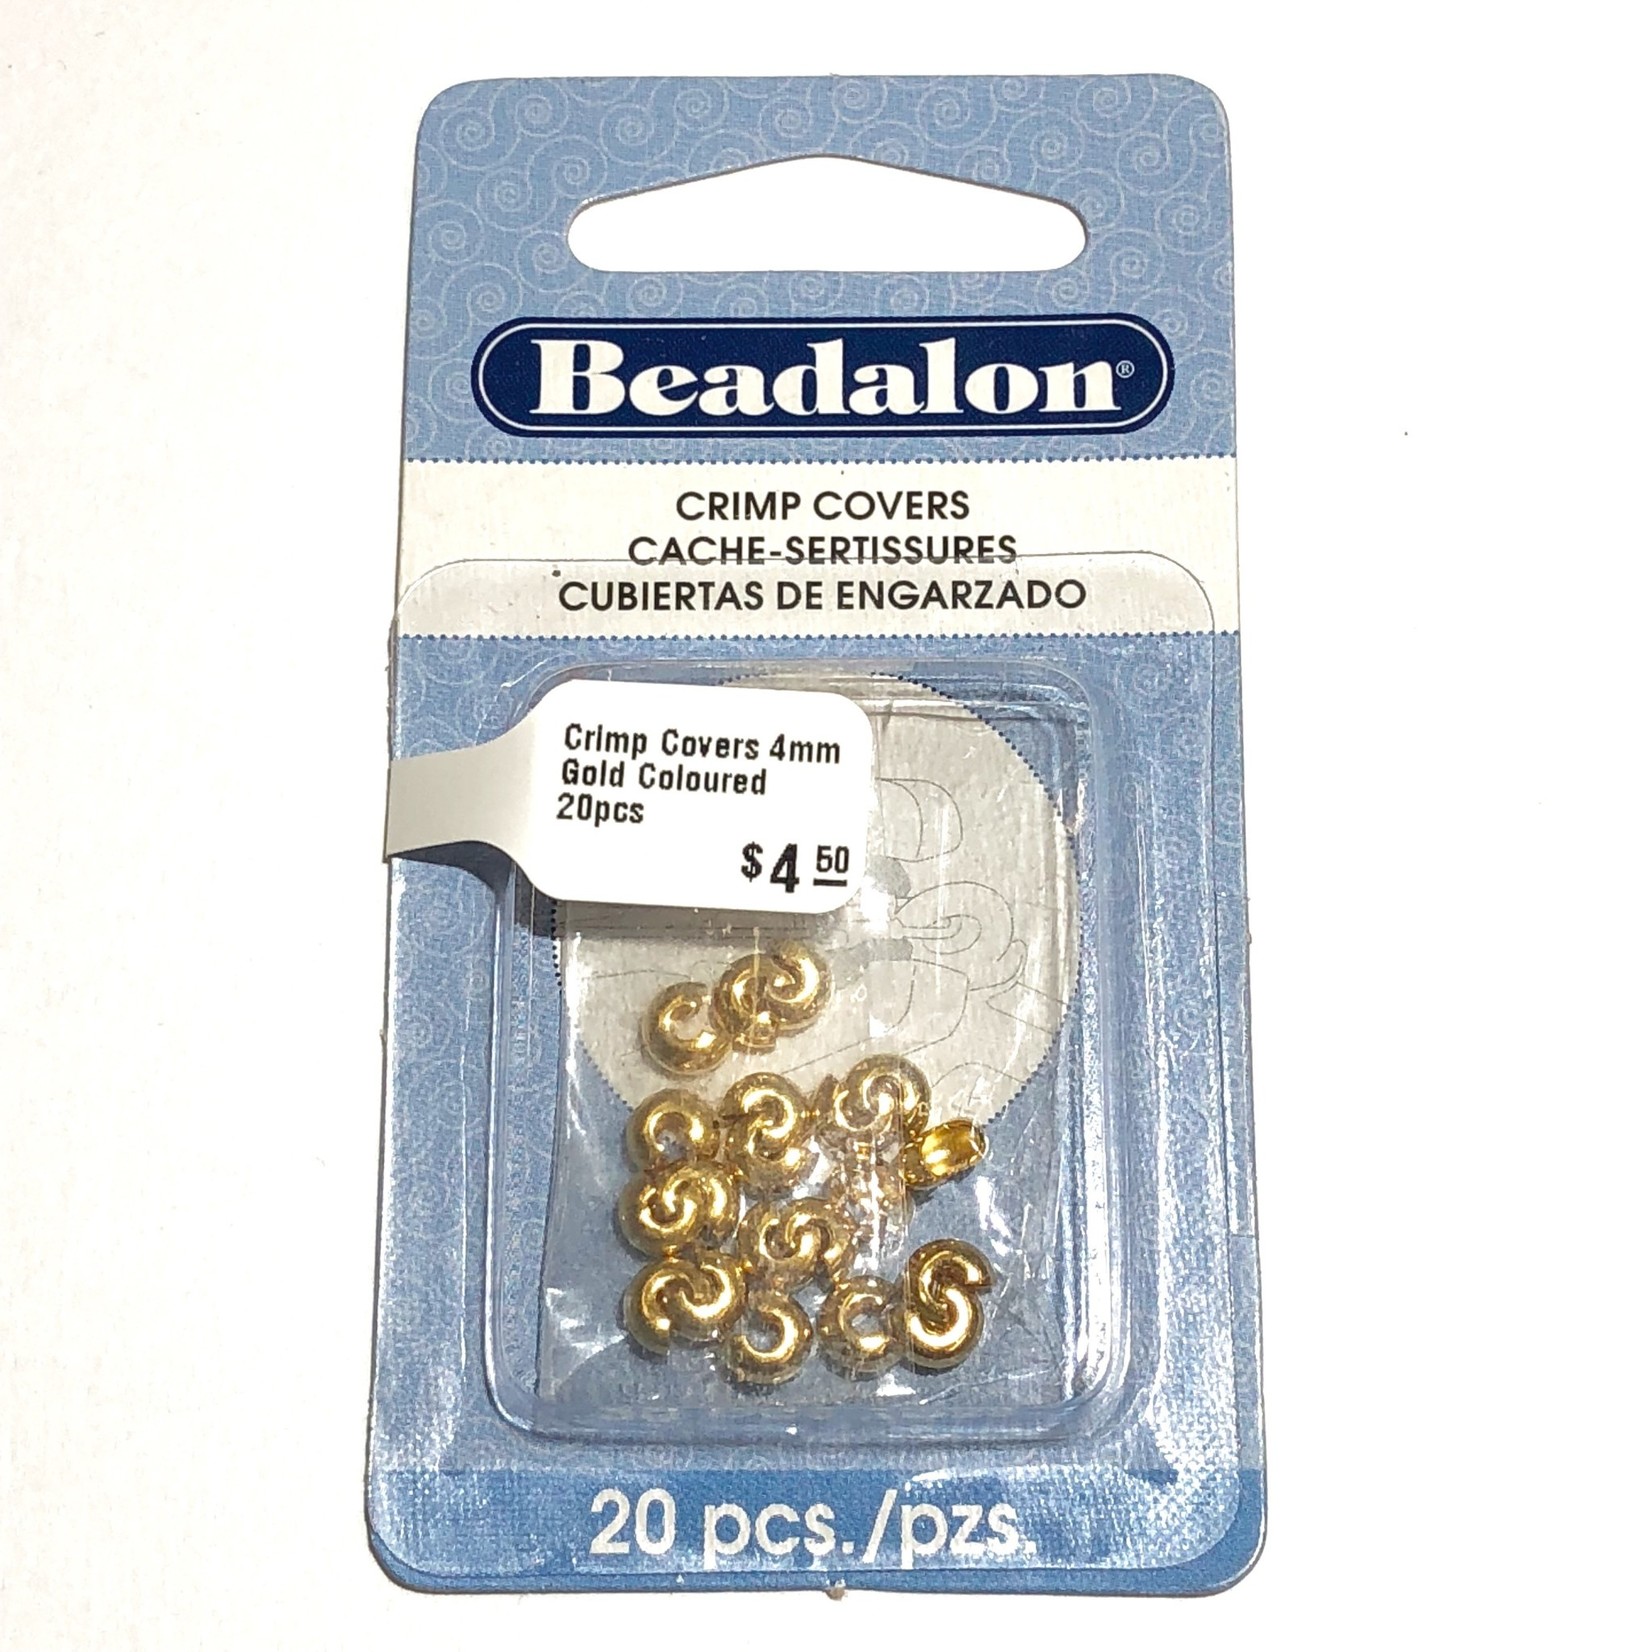 Beadalon Crimp Covers 4mm Gold Coloured 20pcs